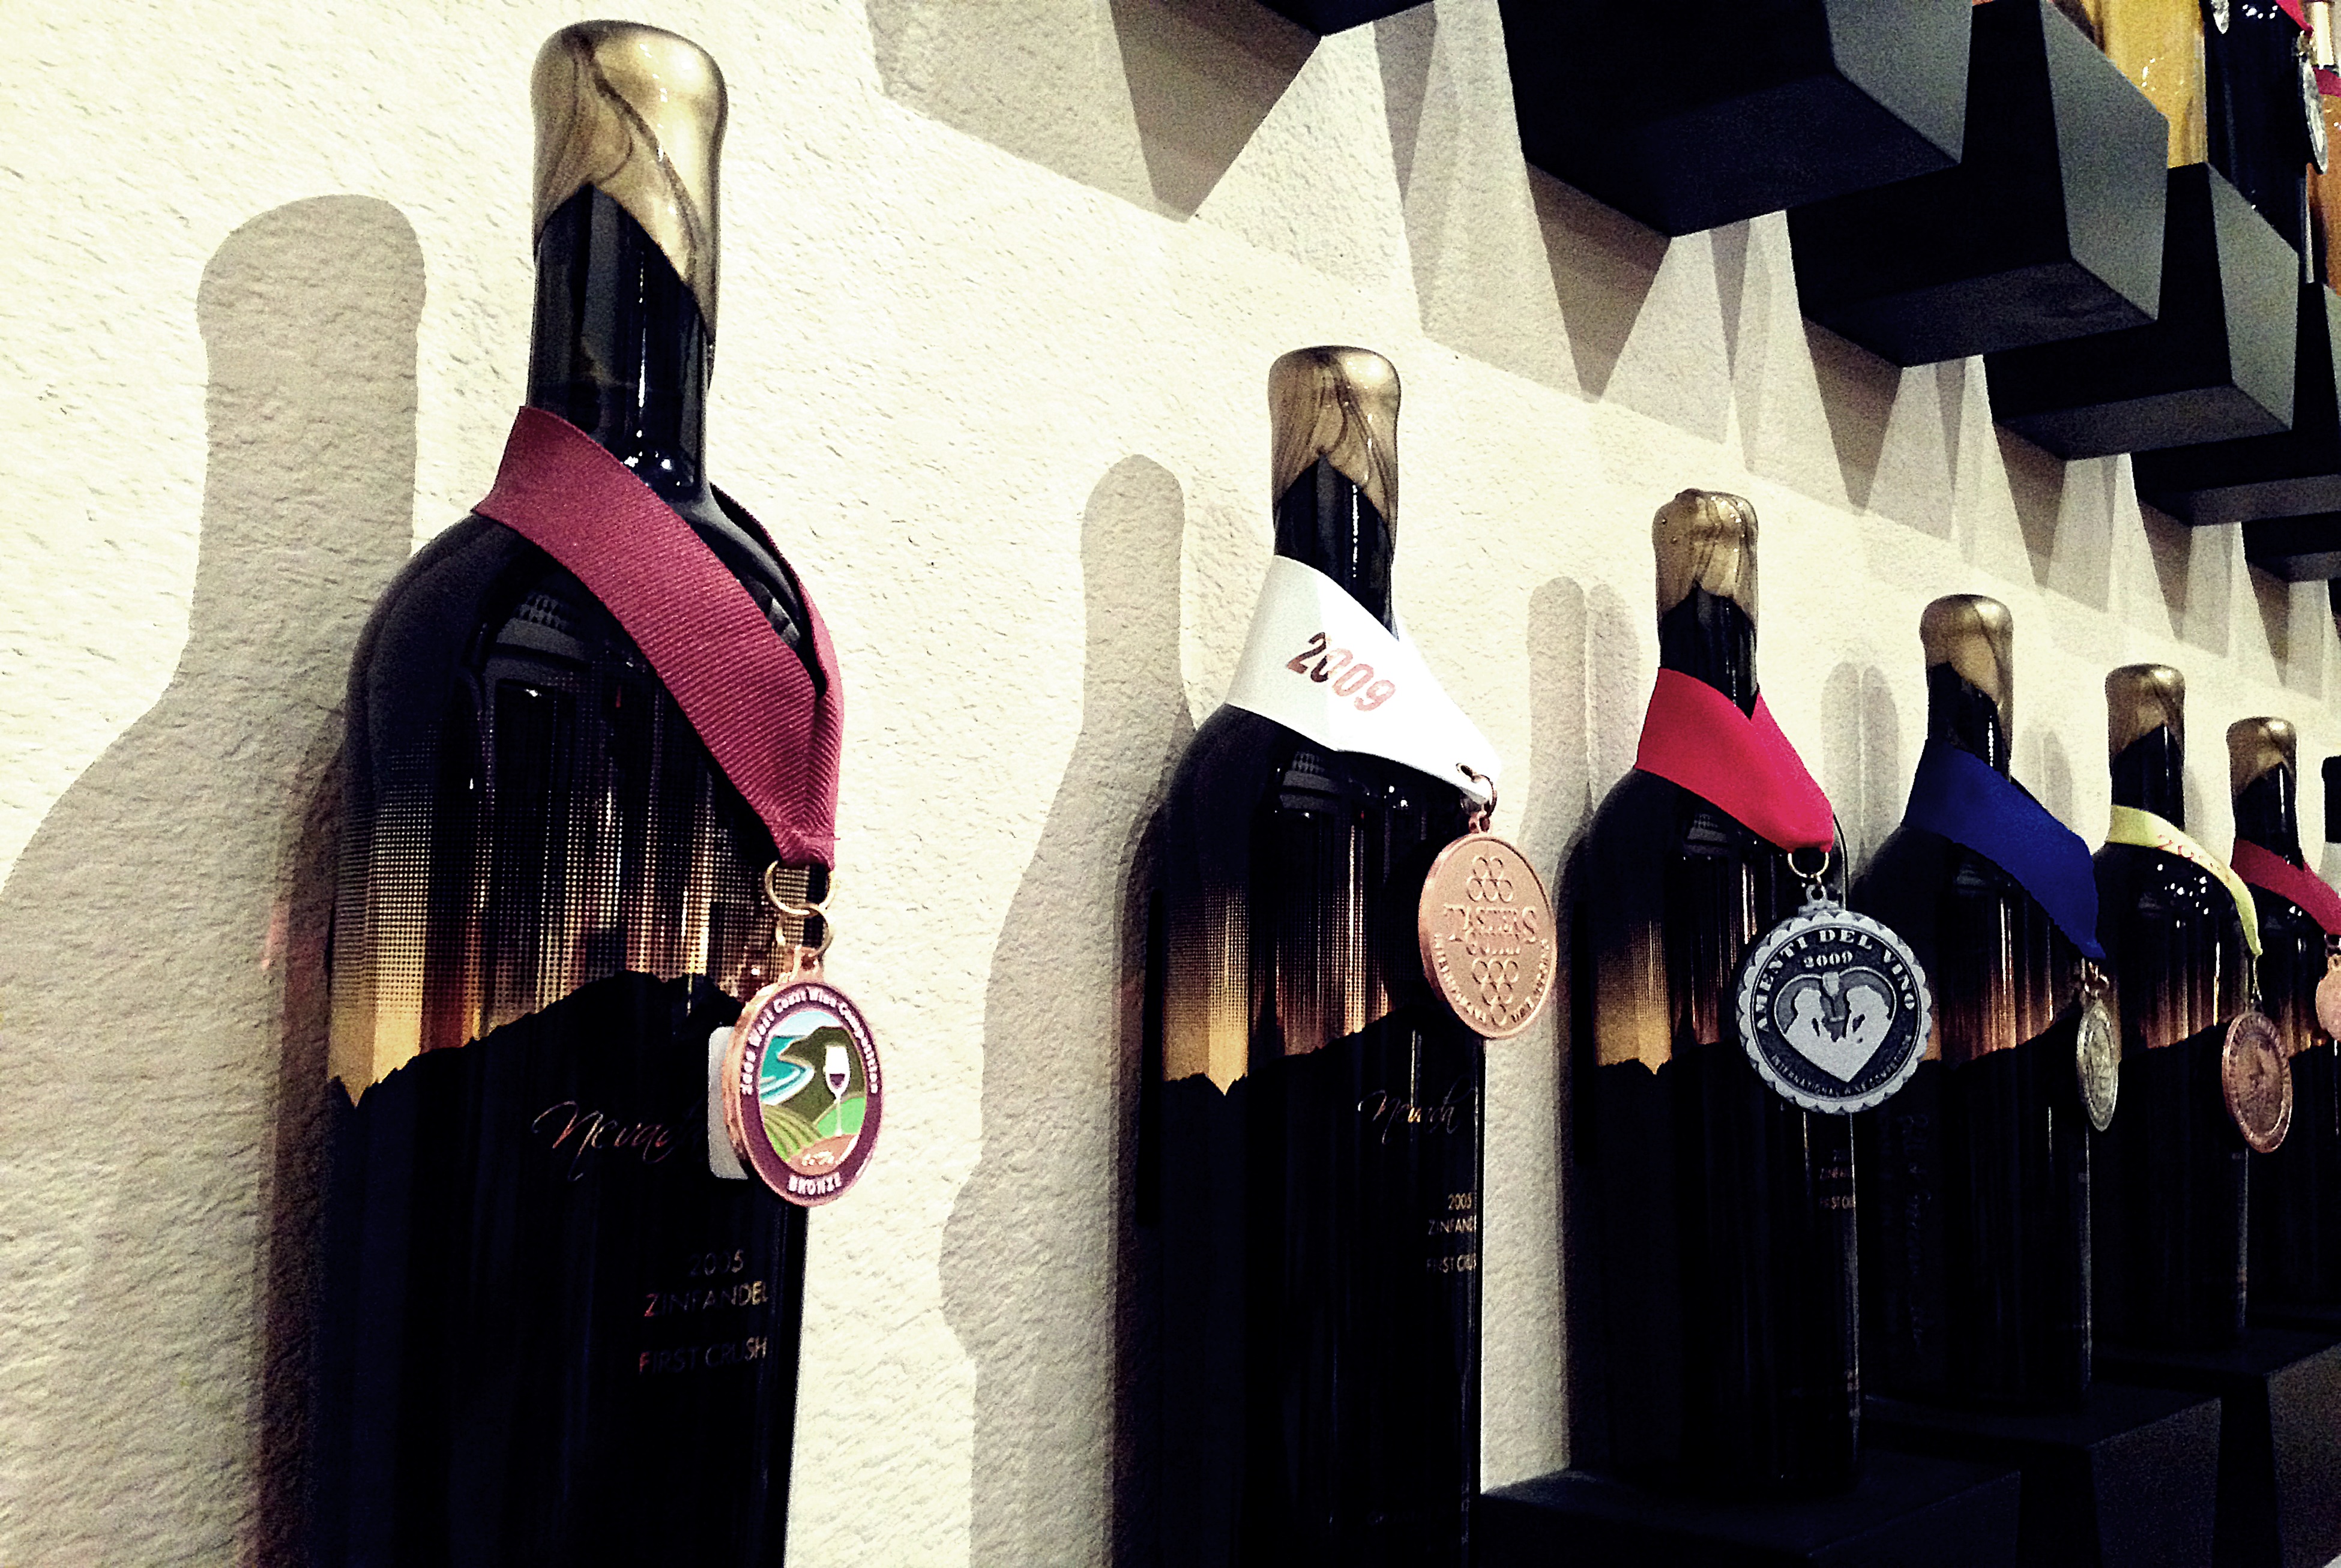 www.invitationinc.com concierge las vegas pahrum winery employee appreciation